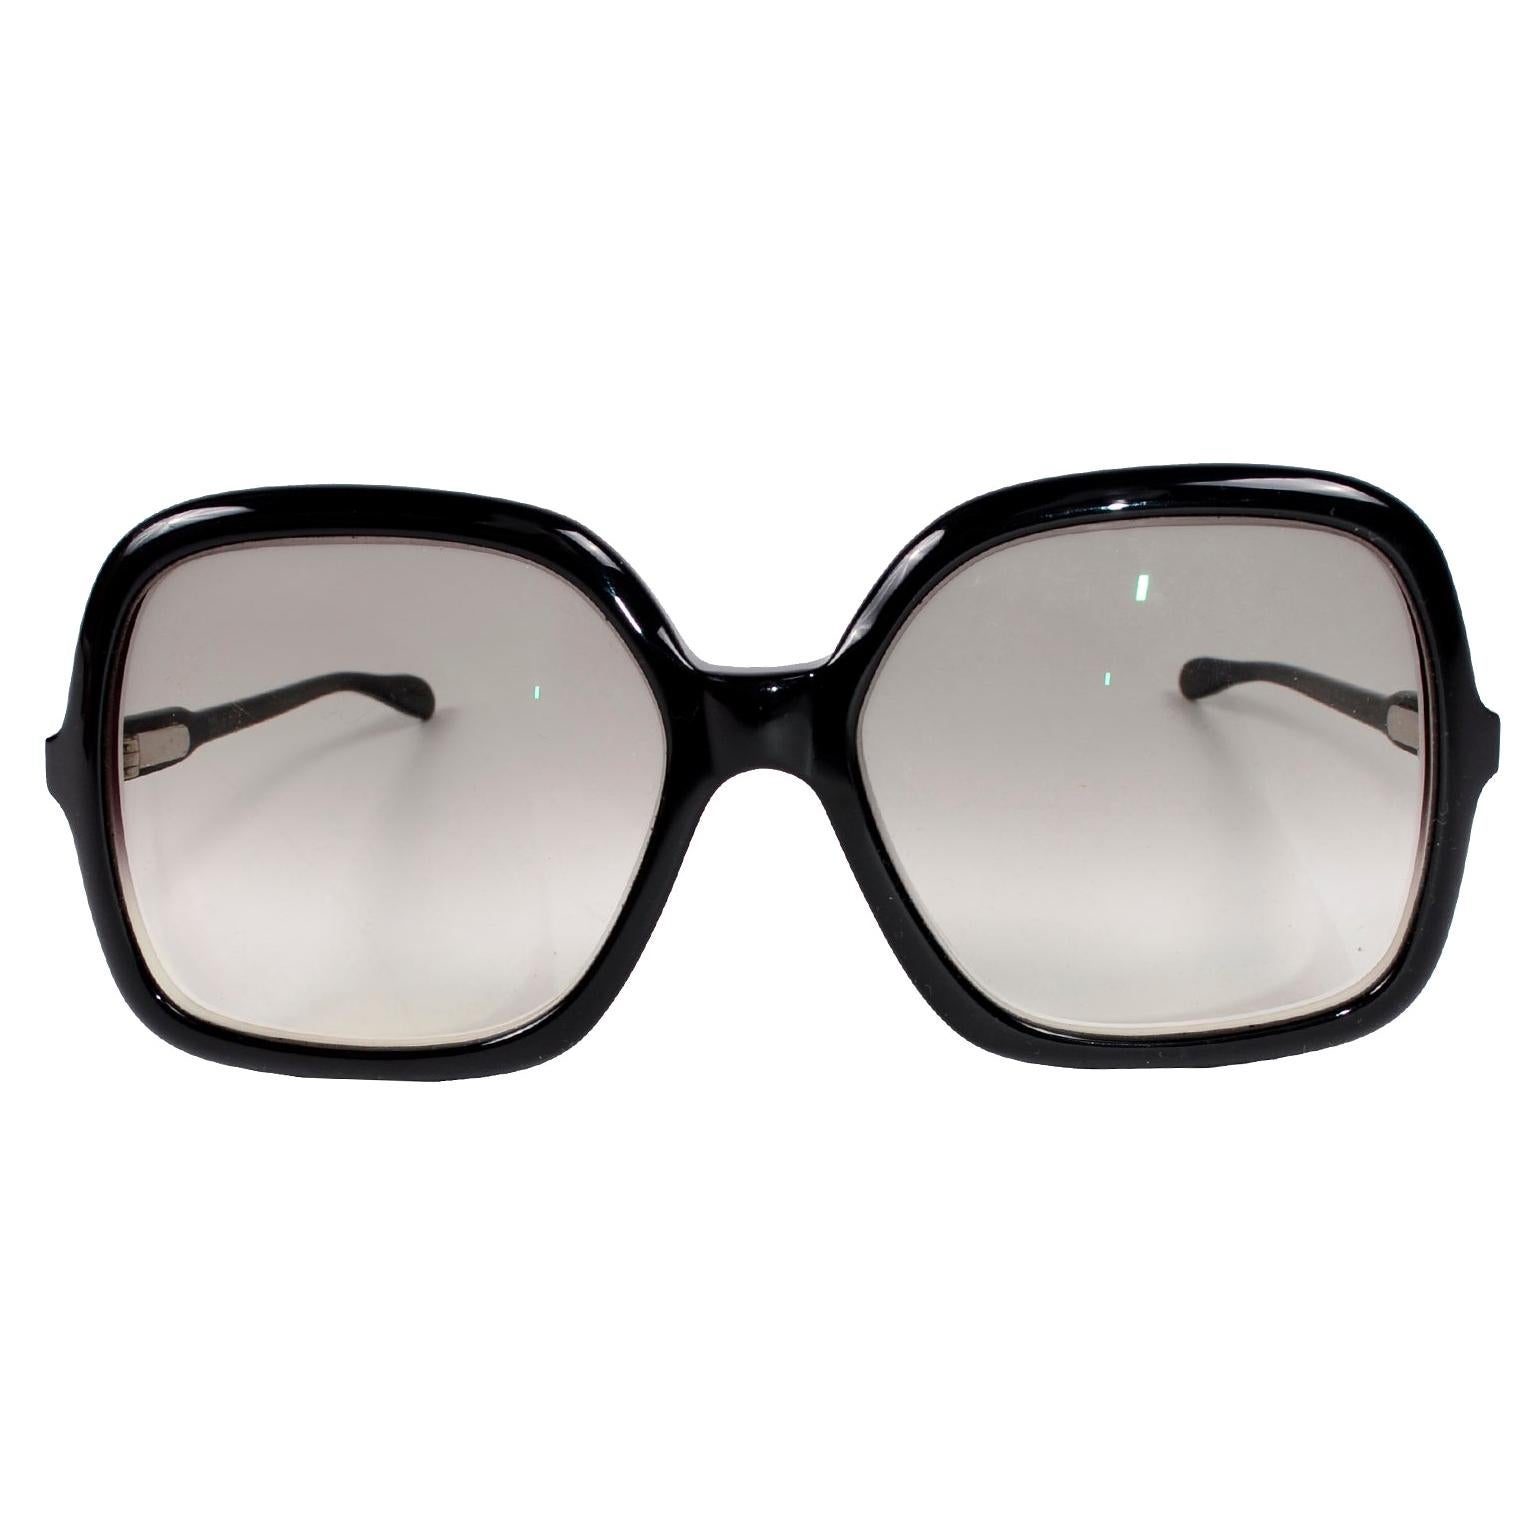 Friedrichs Palm Beach Vintage Oversized Black Eyeglass Frames Sunglasses